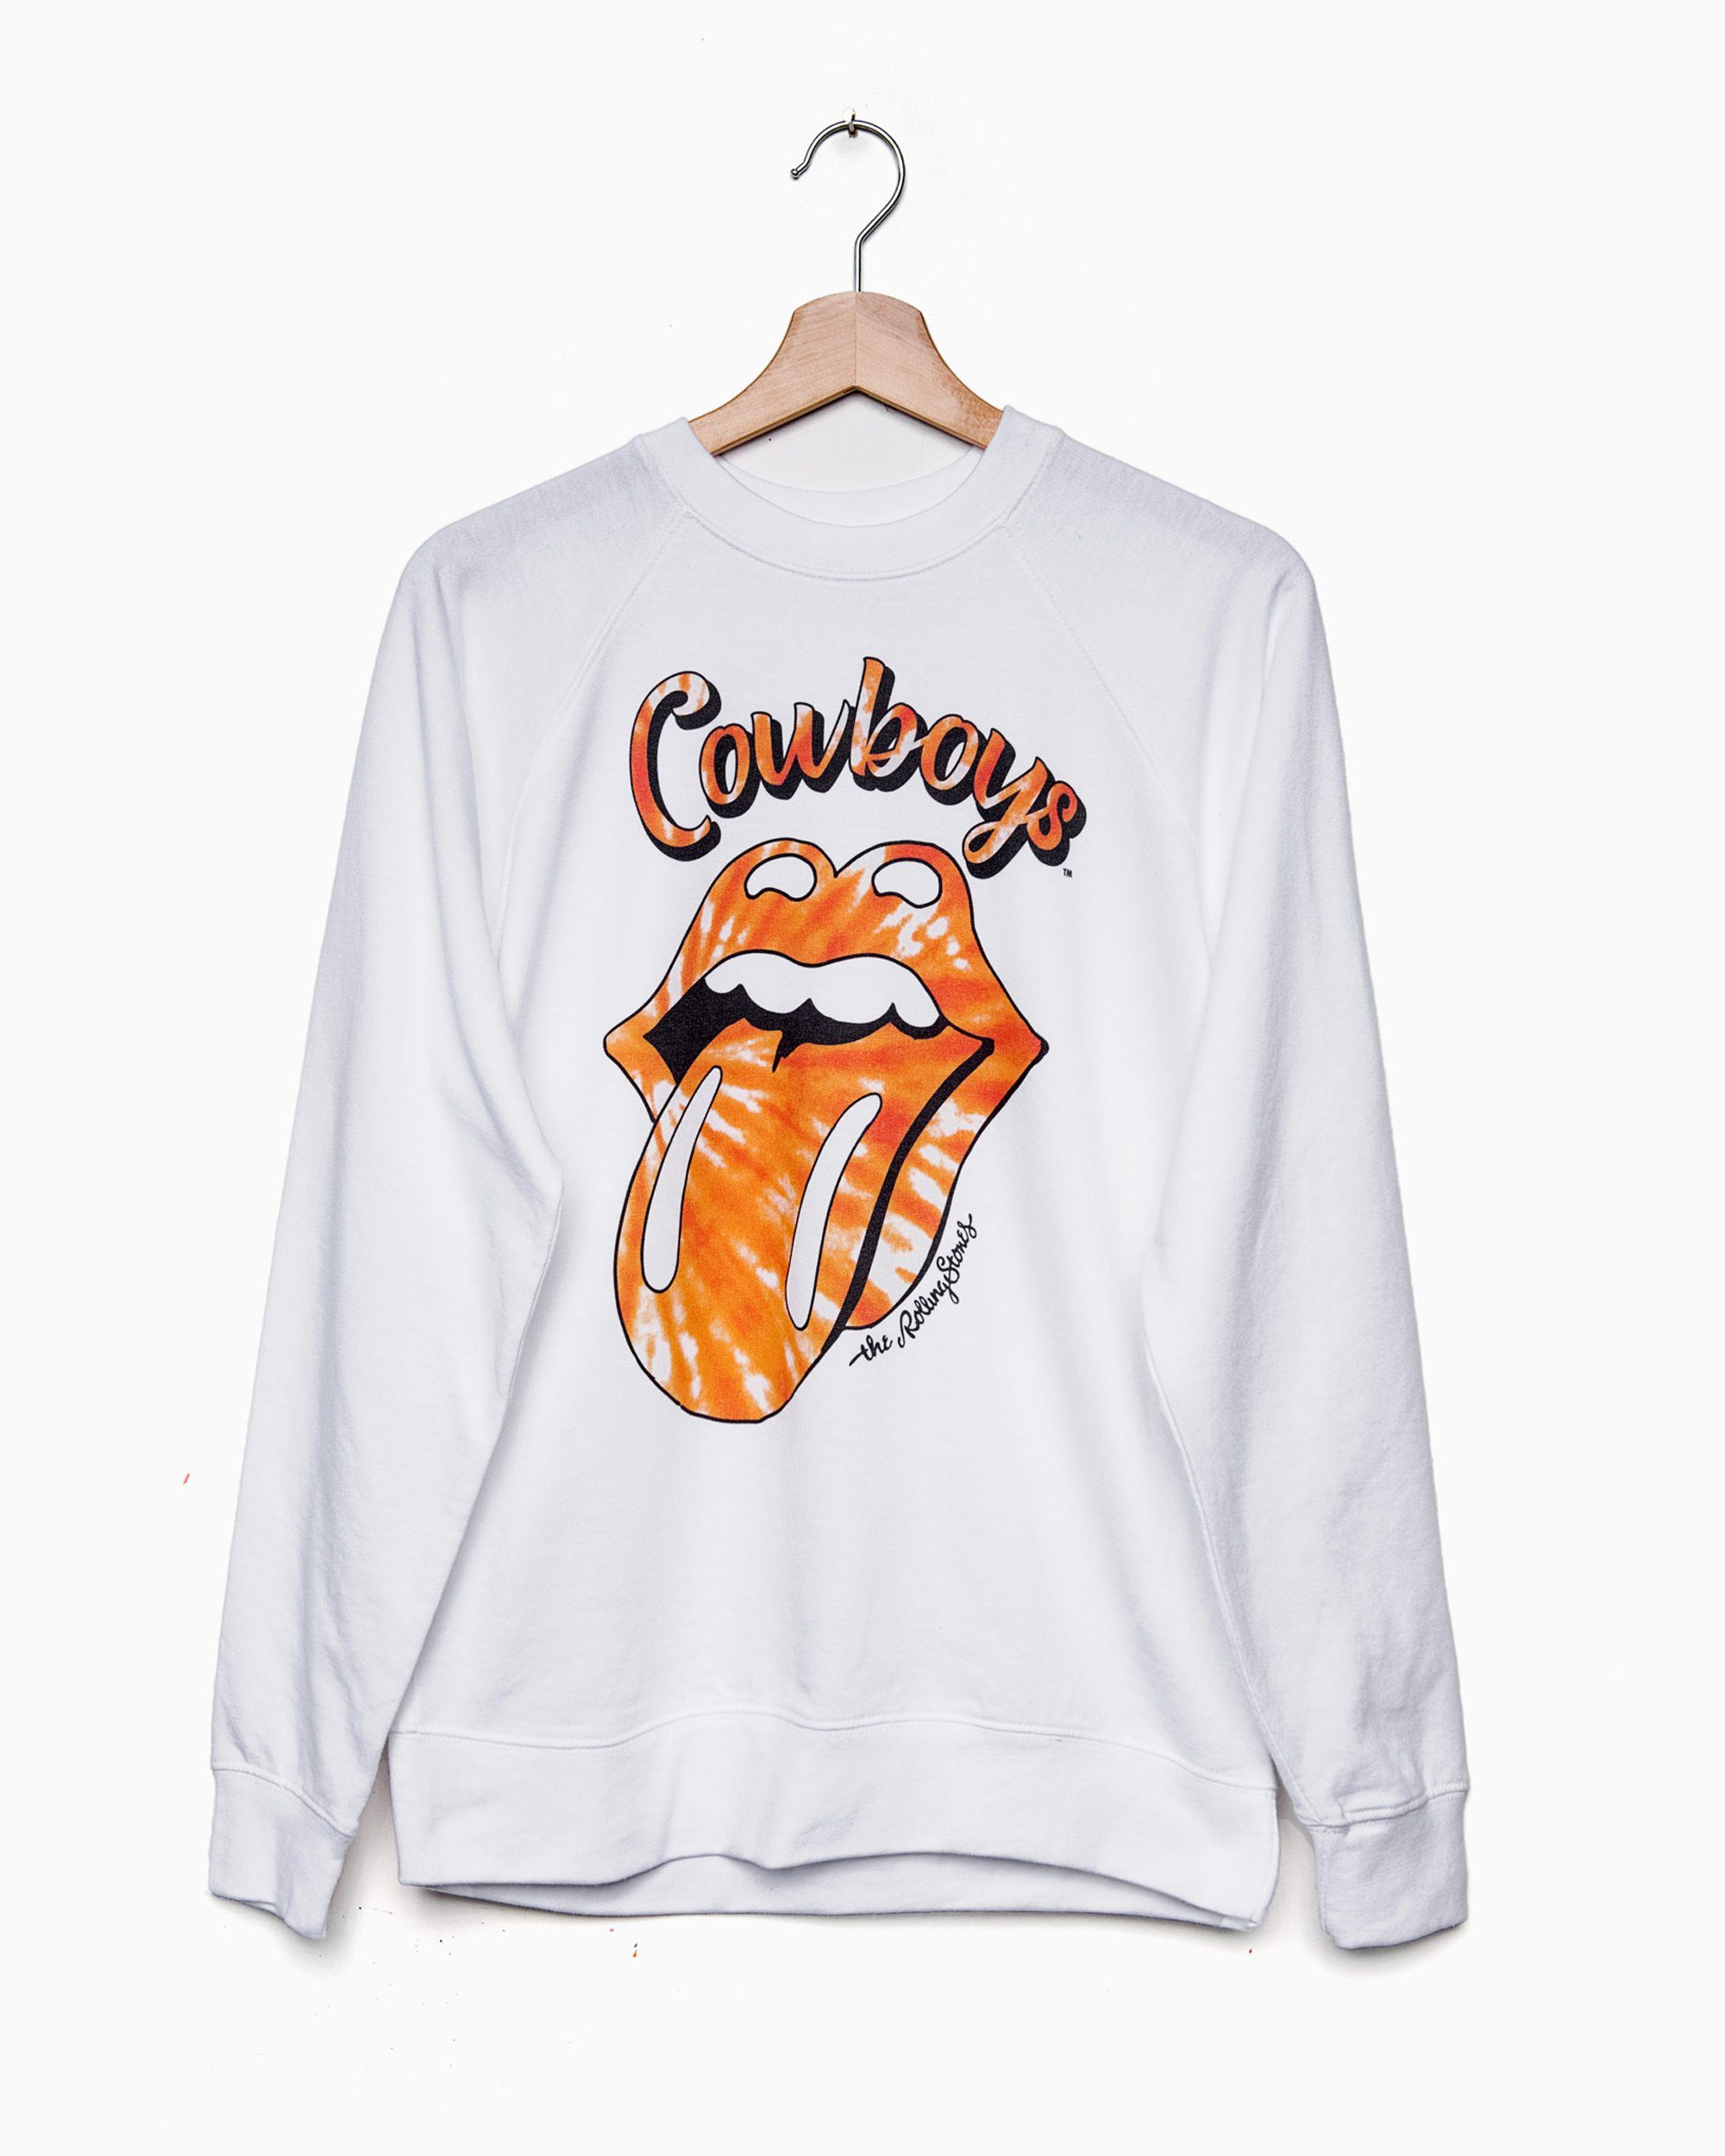 Rolling Stones Cowboys Tie Dye Lick White Sweatshirt - shoplivylu